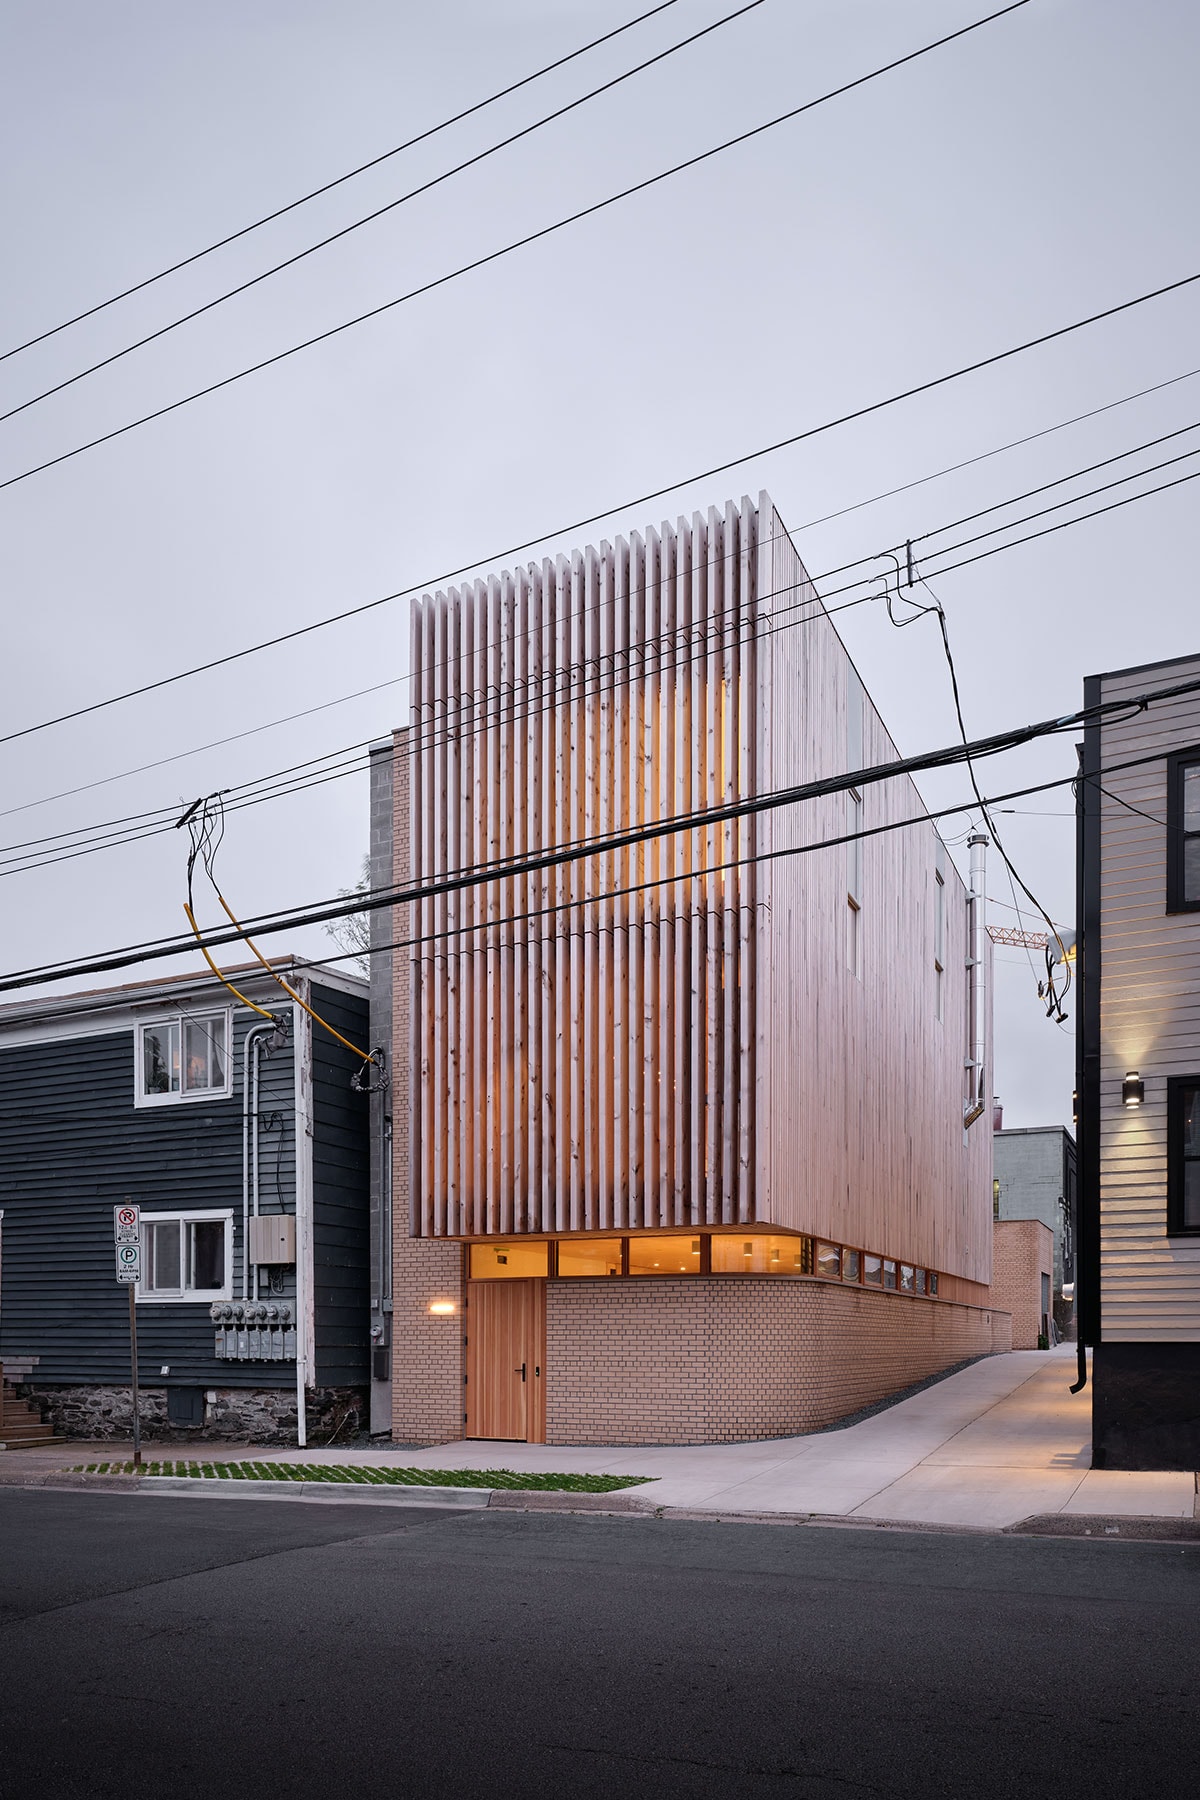 Omar Gandhi Architect Halifax Nova Scotia OG House Info 902 maritimes homes buildings north end dartmouth halifax natural wood minimal 